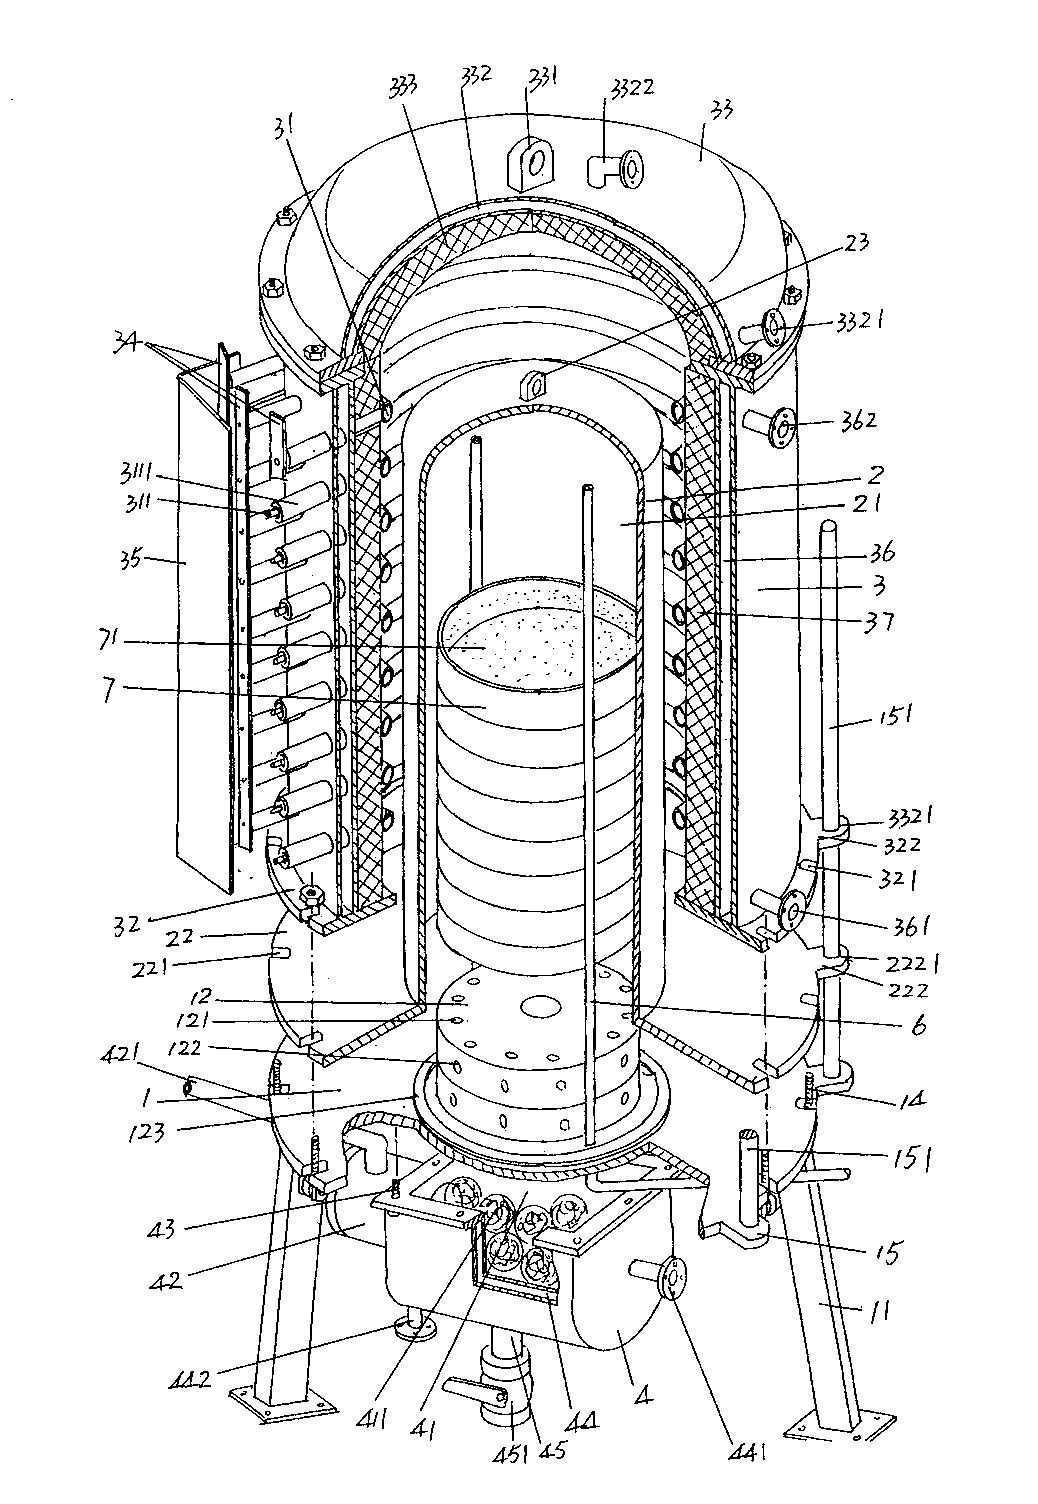 Siphon-type degreasing furnace